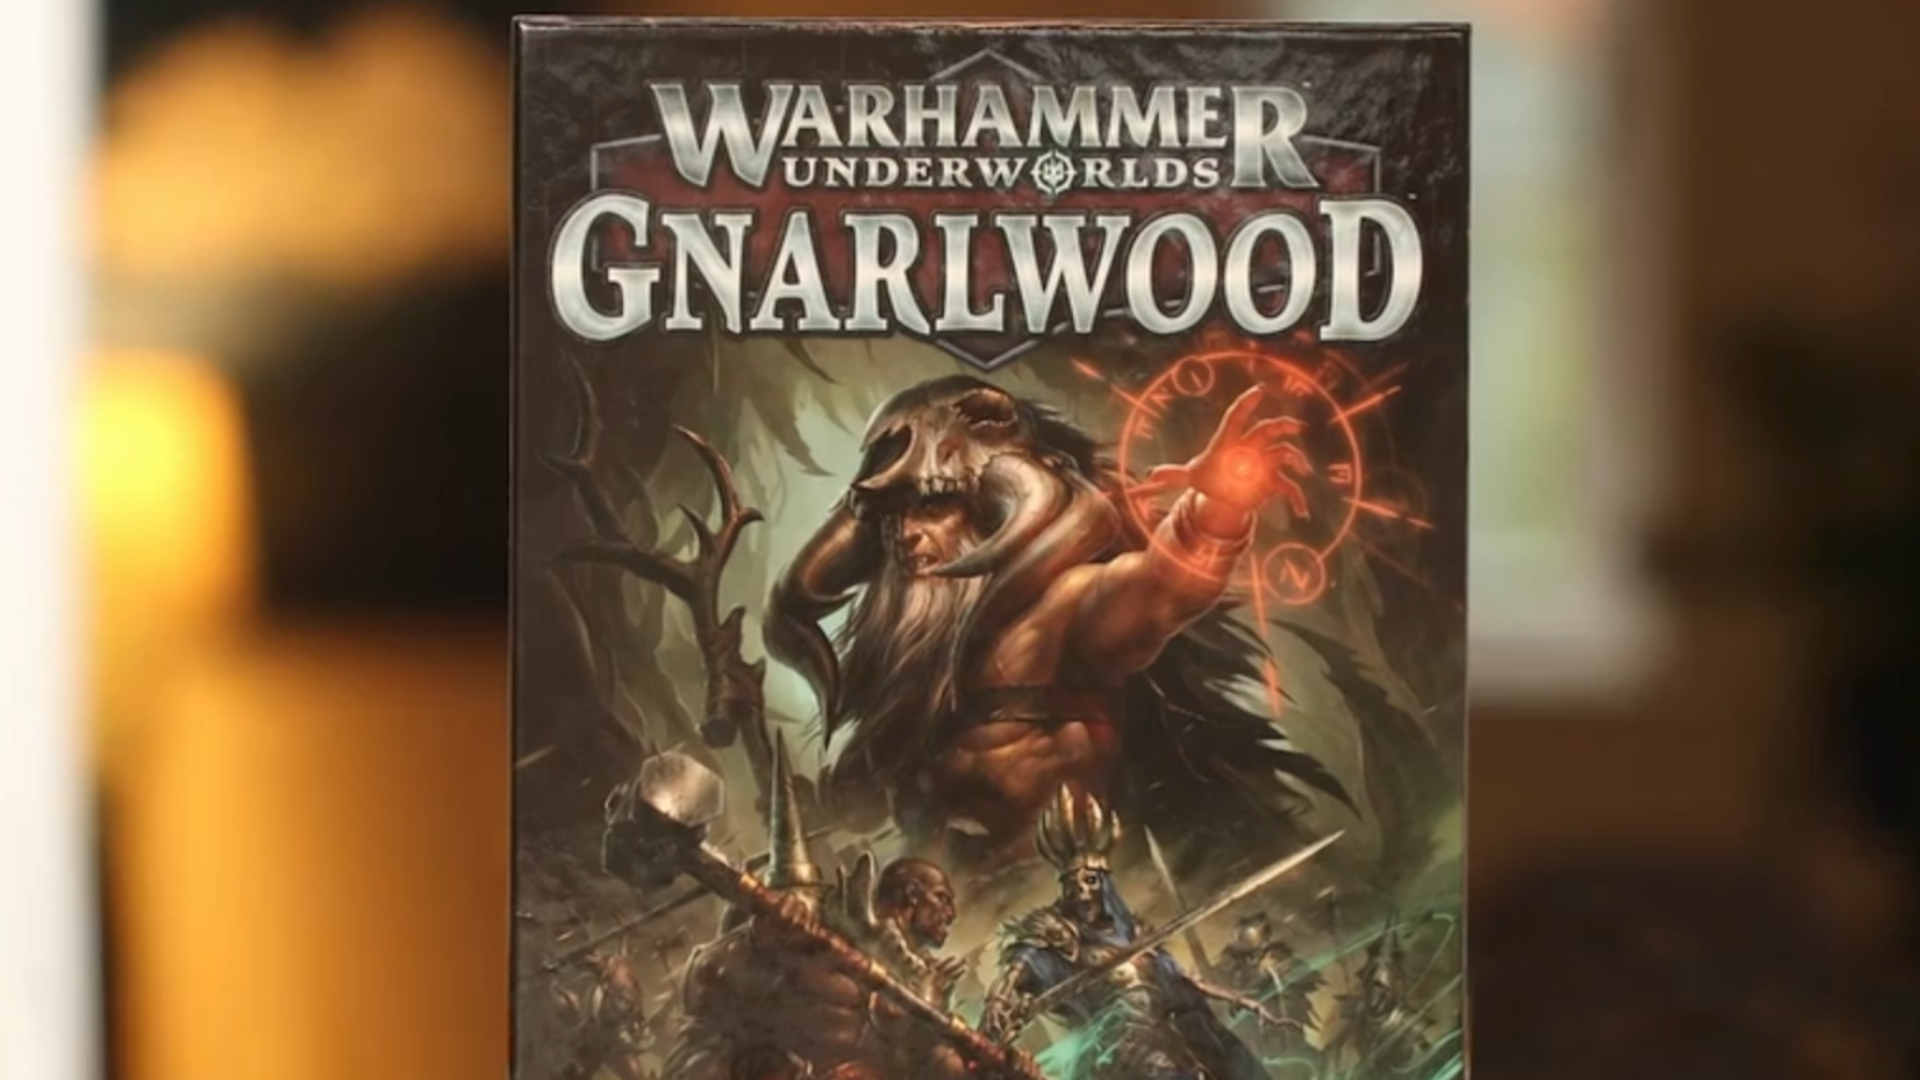 Warhammer Underworlds Warband revealed: Sons of Velmorn : r